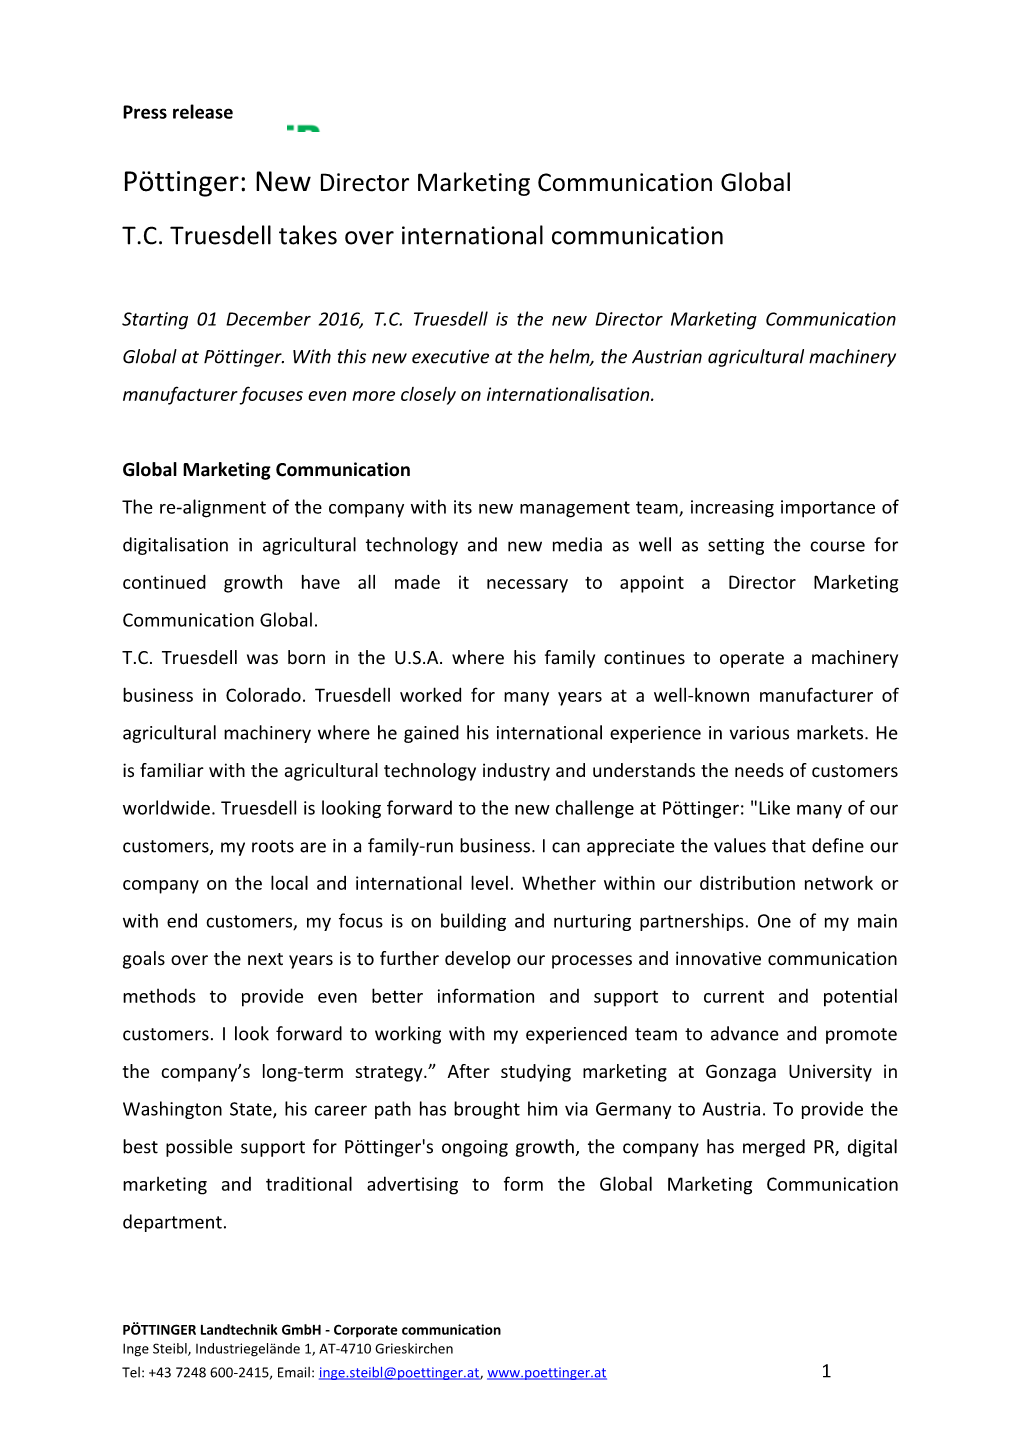 T.C. Truesdell Takes Over International Communication